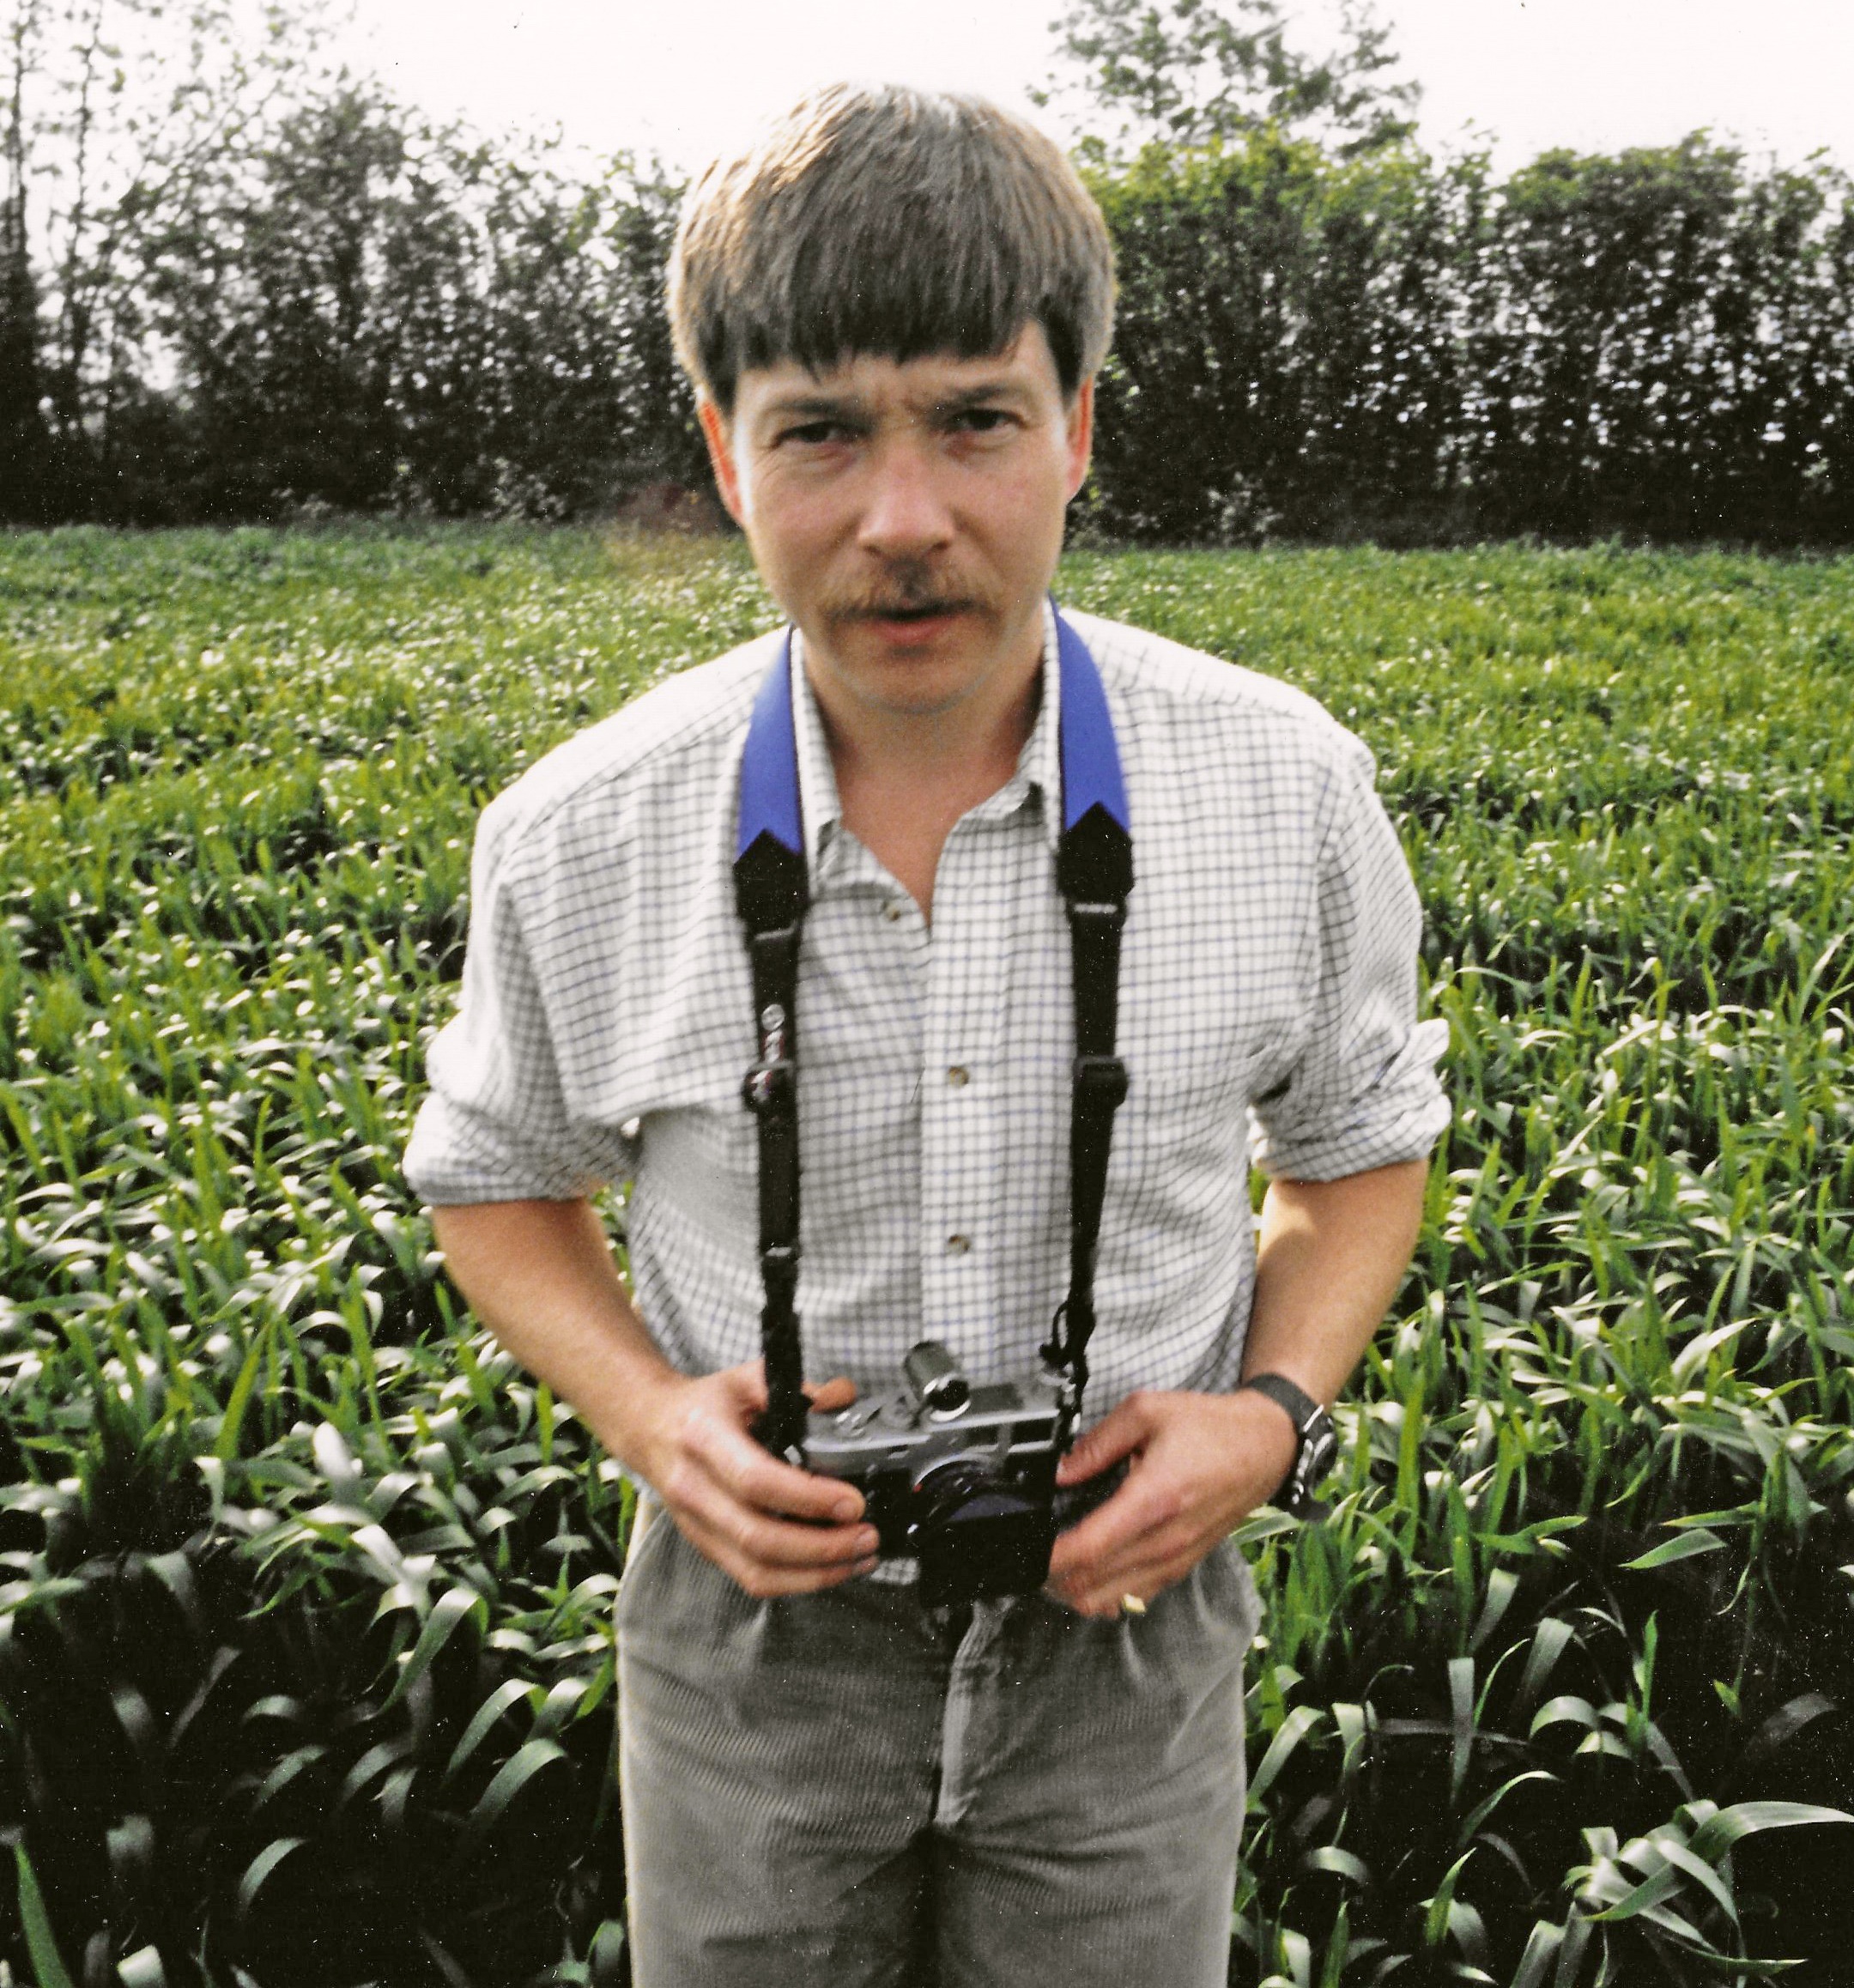 Tim Hawkins with Leica M4 taken by Tim Rice